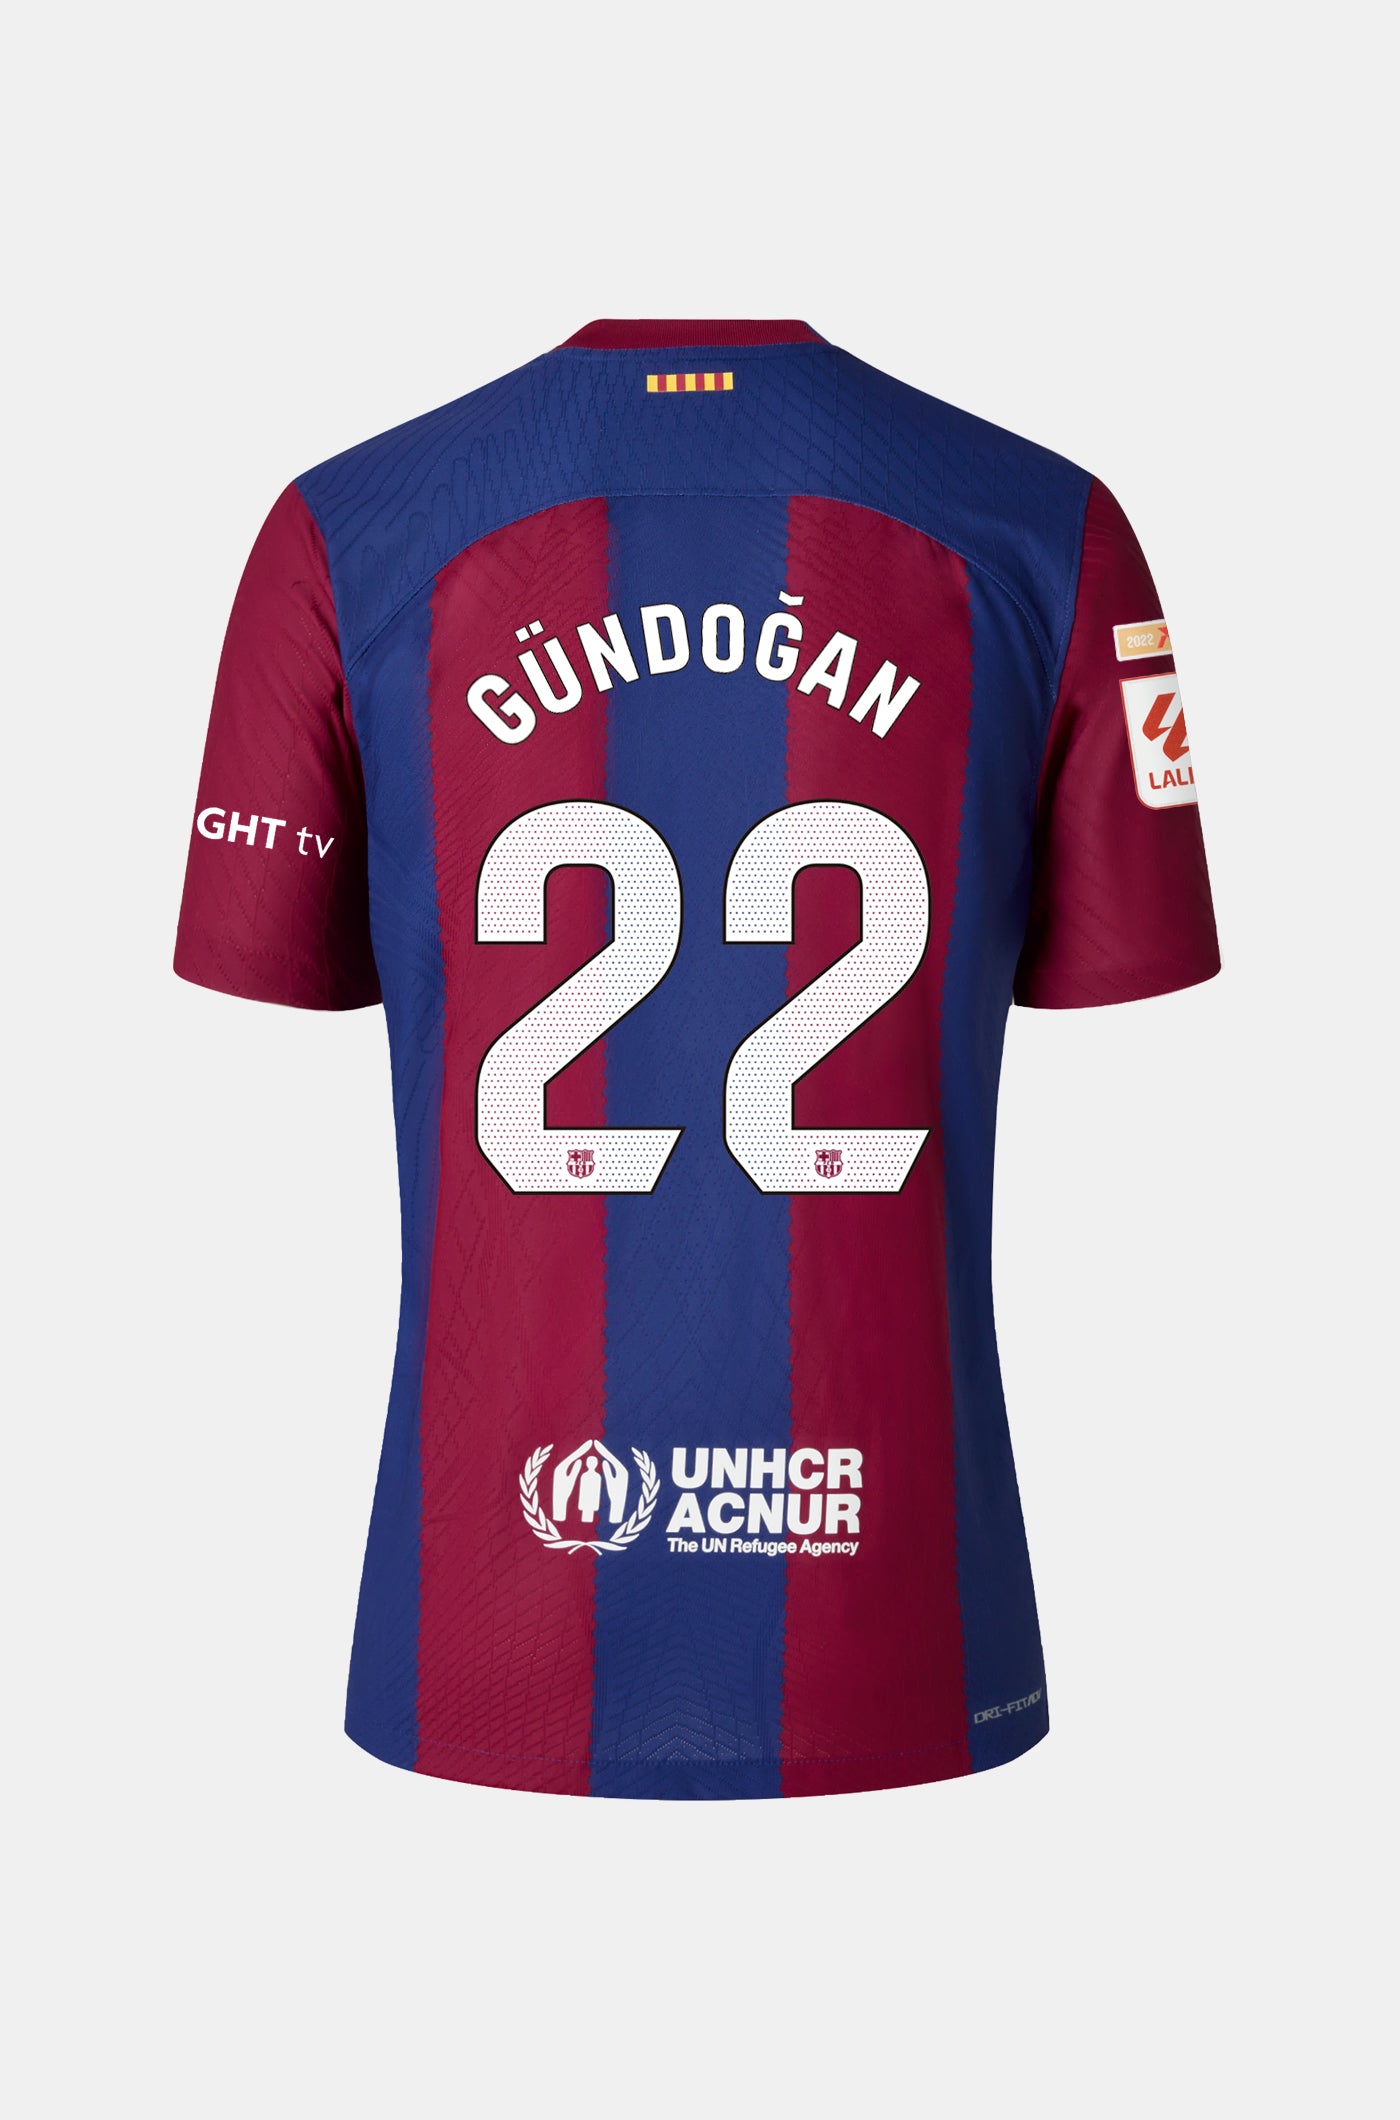 LFP FC Barcelona home shirt 23/24 Player's Edition - GÜNDO?AN